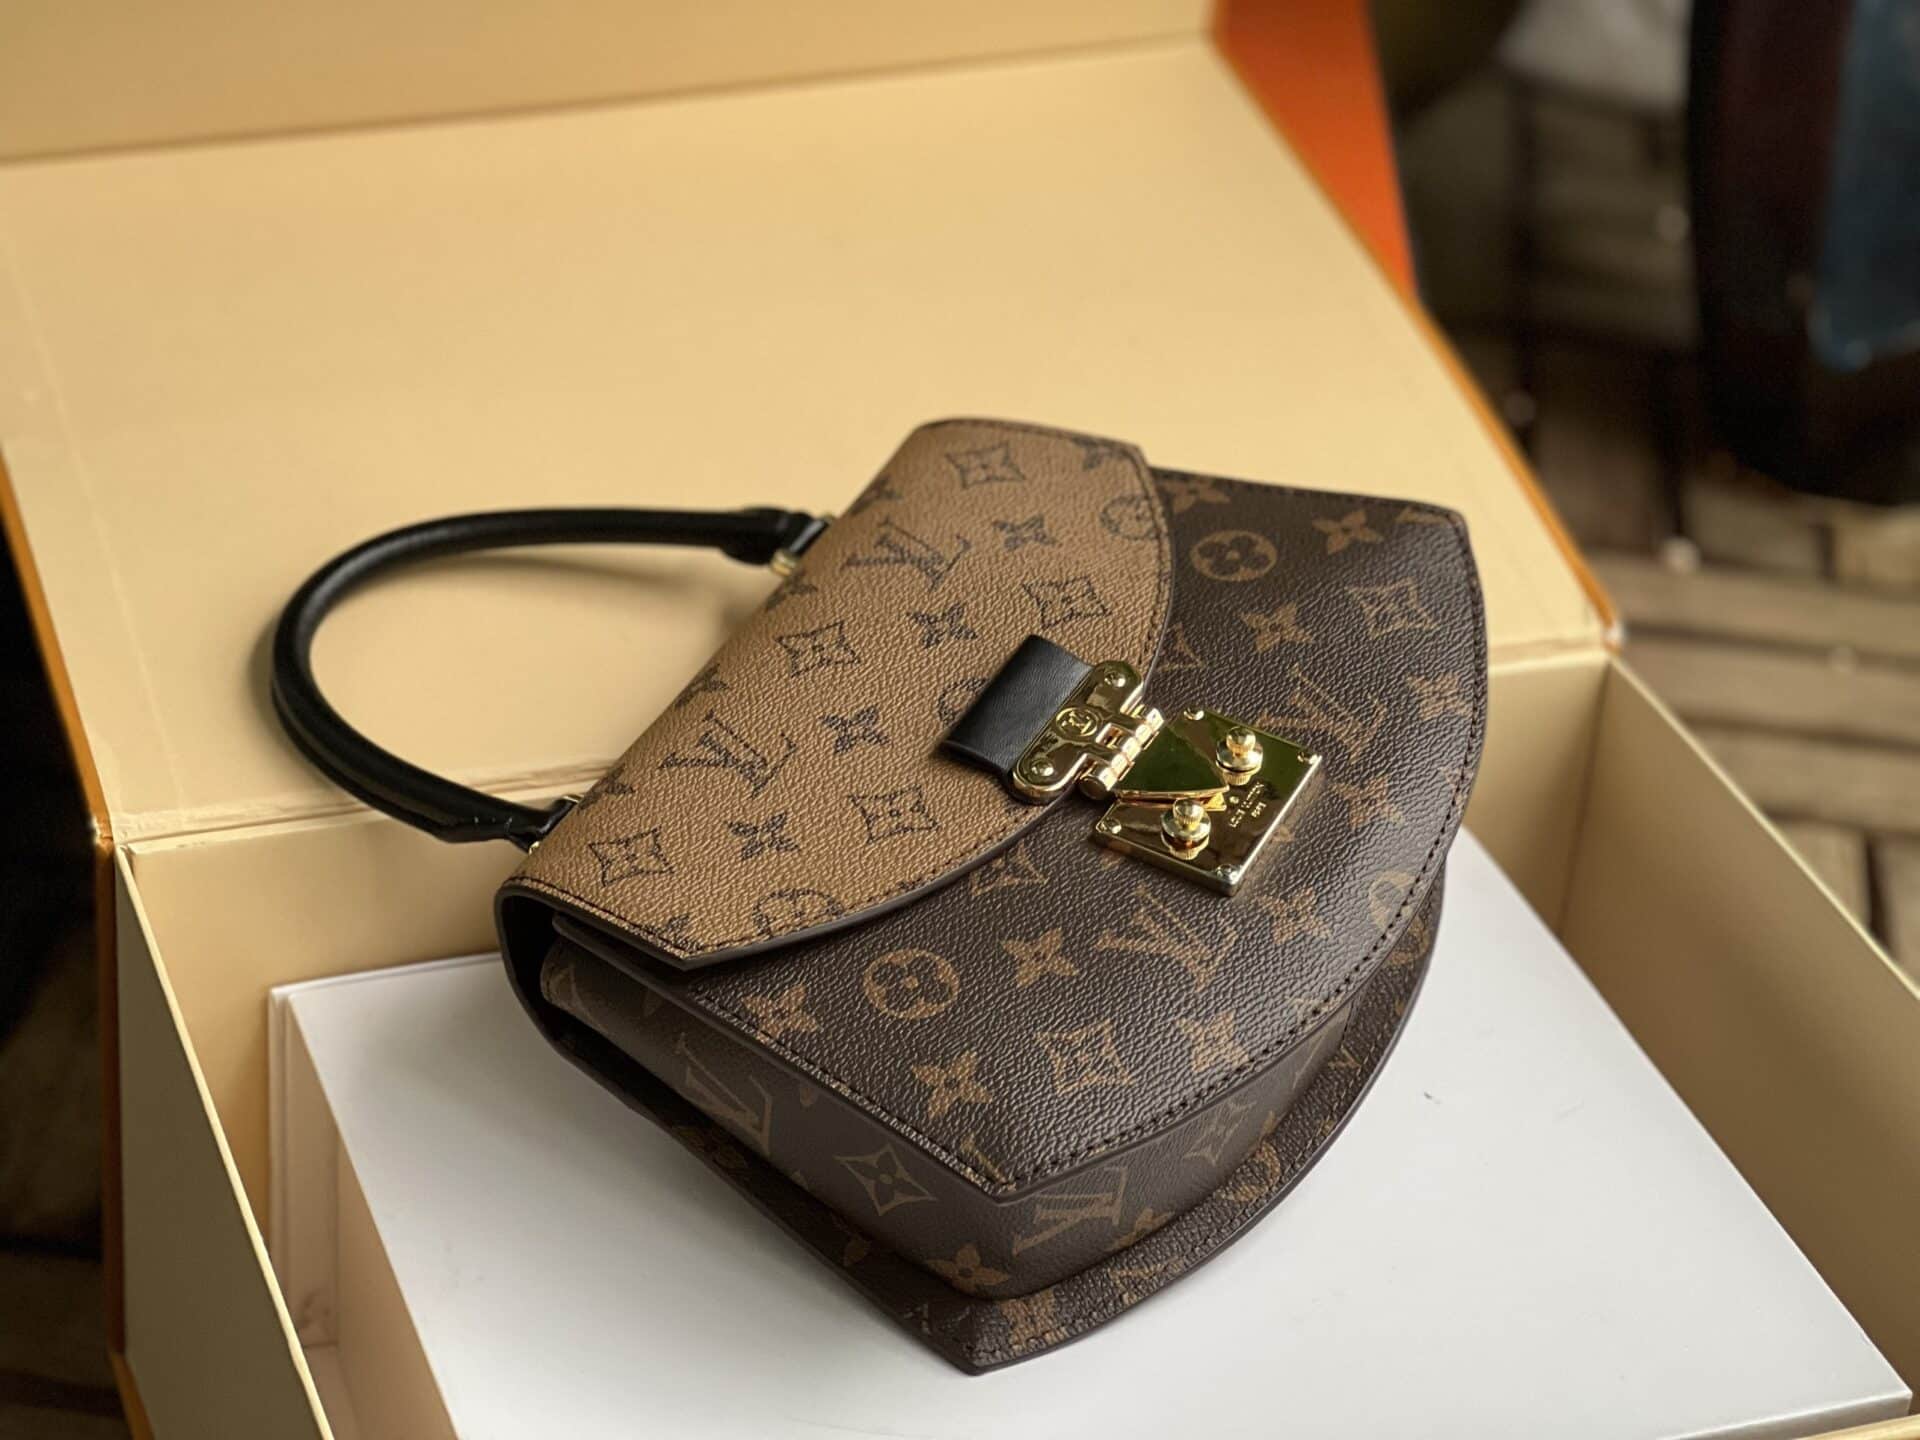 Authentic Louis Vuitton Speedy Satchel Monogram Bag LV Handbag Vintage   eBay